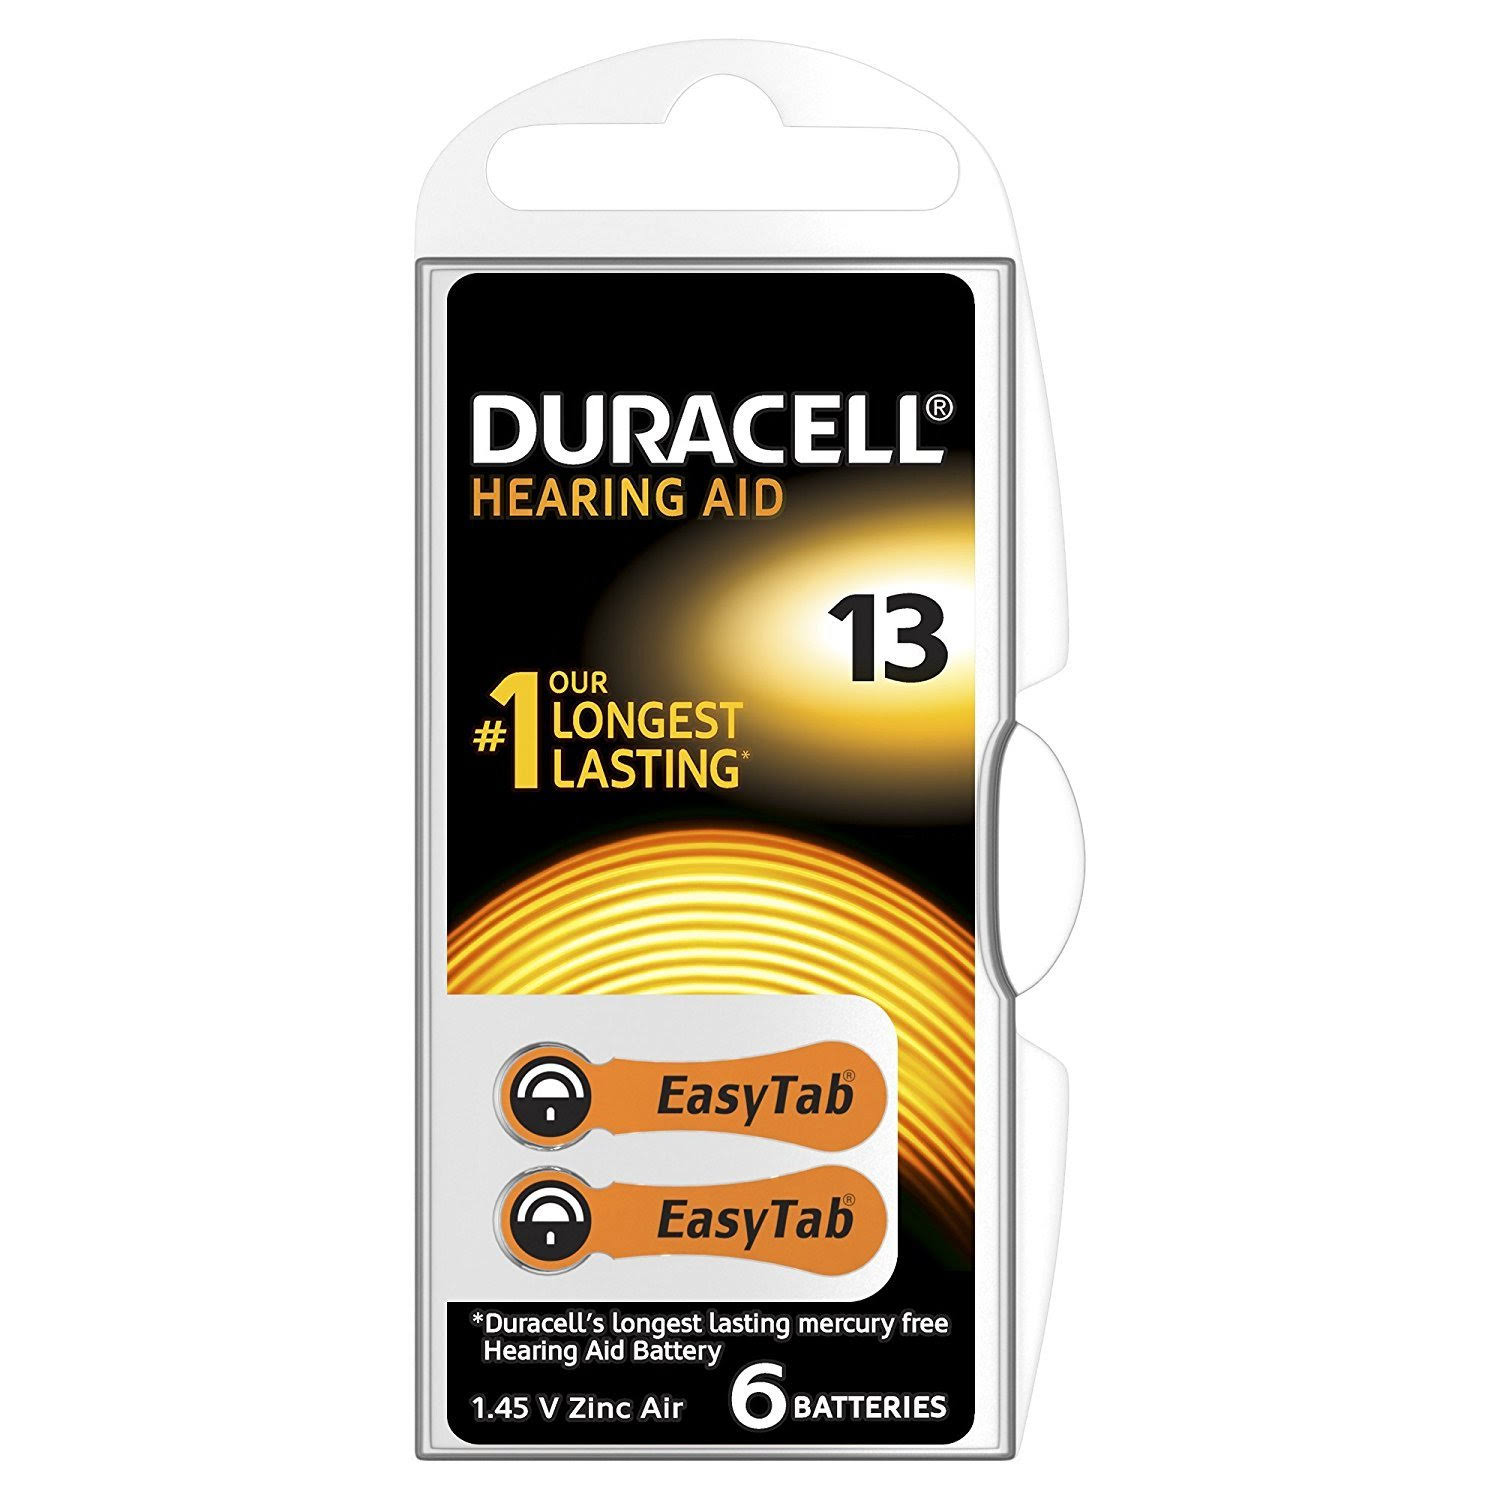 Duracell Hearing Aid Batteries - 6x1.45V